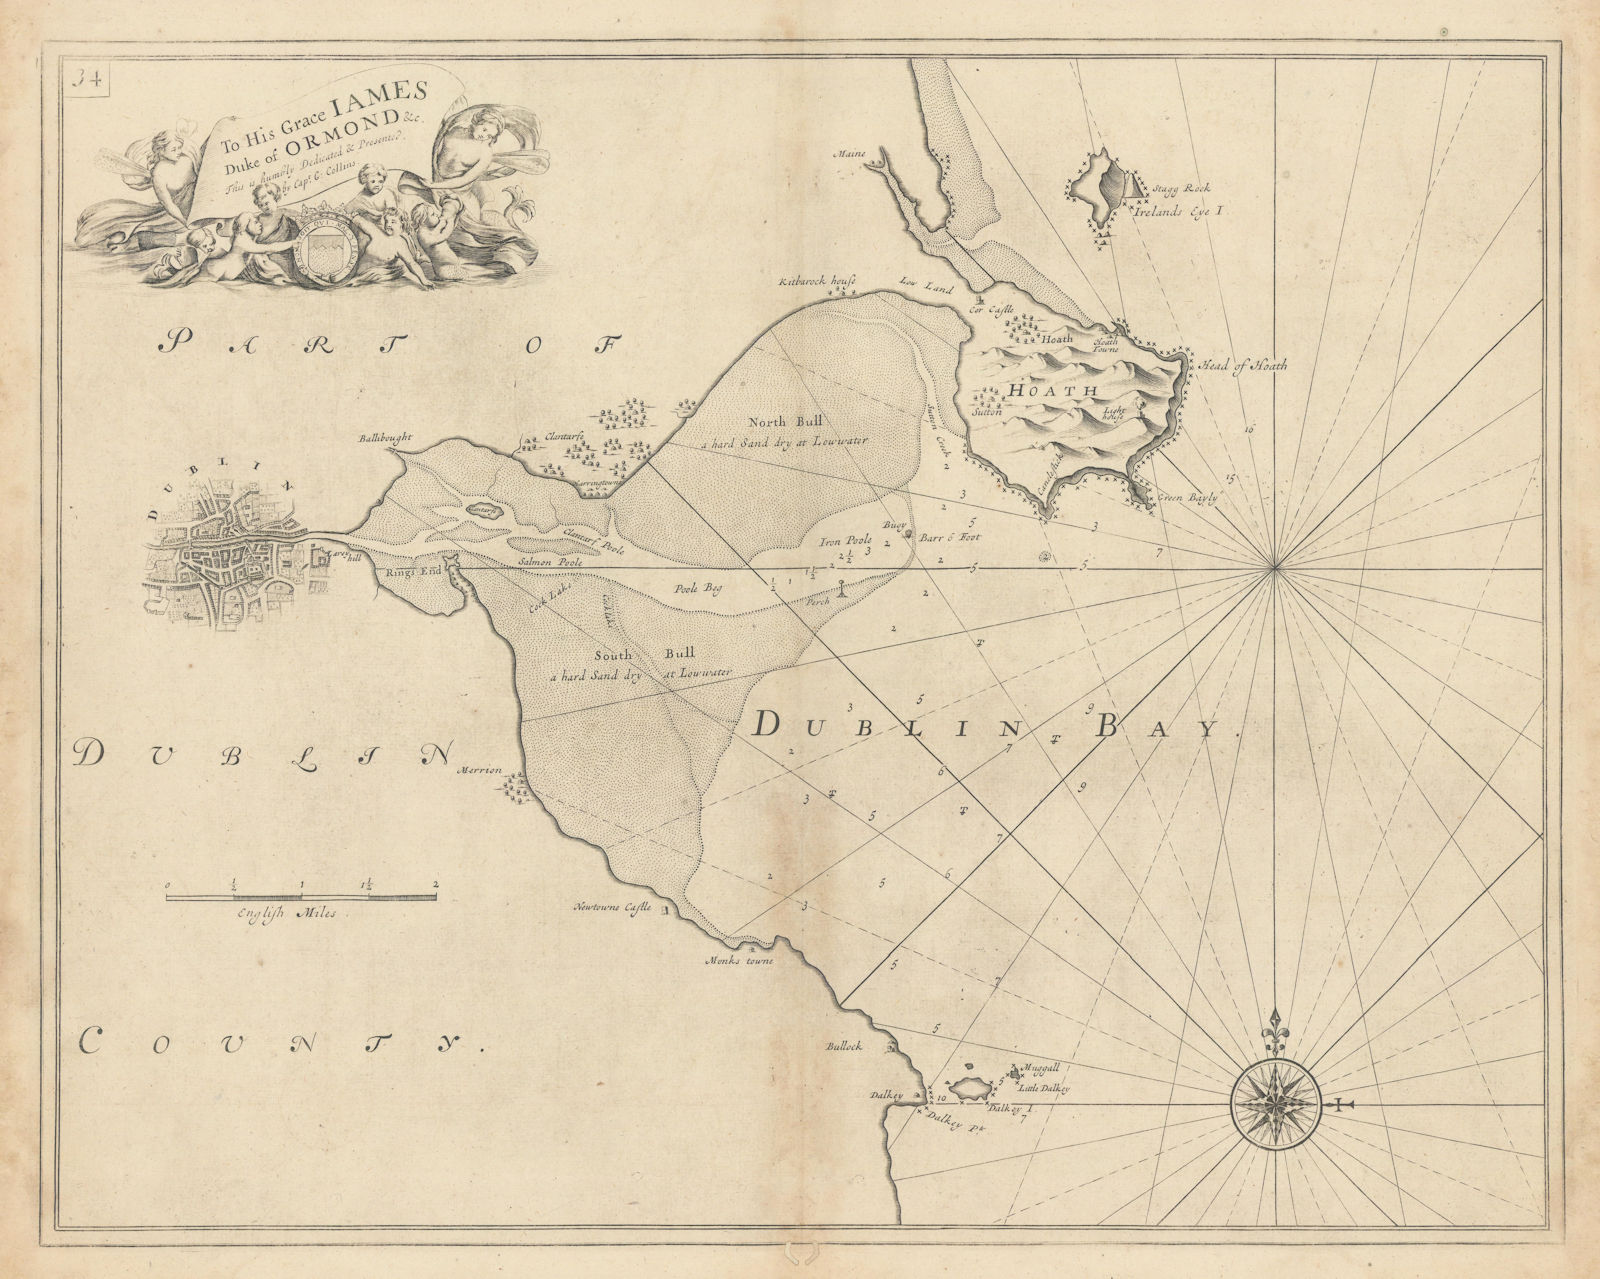 DUBLIN BAY sea chart. Howth Head Dalkey Clontarf Merrion. COLLINS 1723 old map